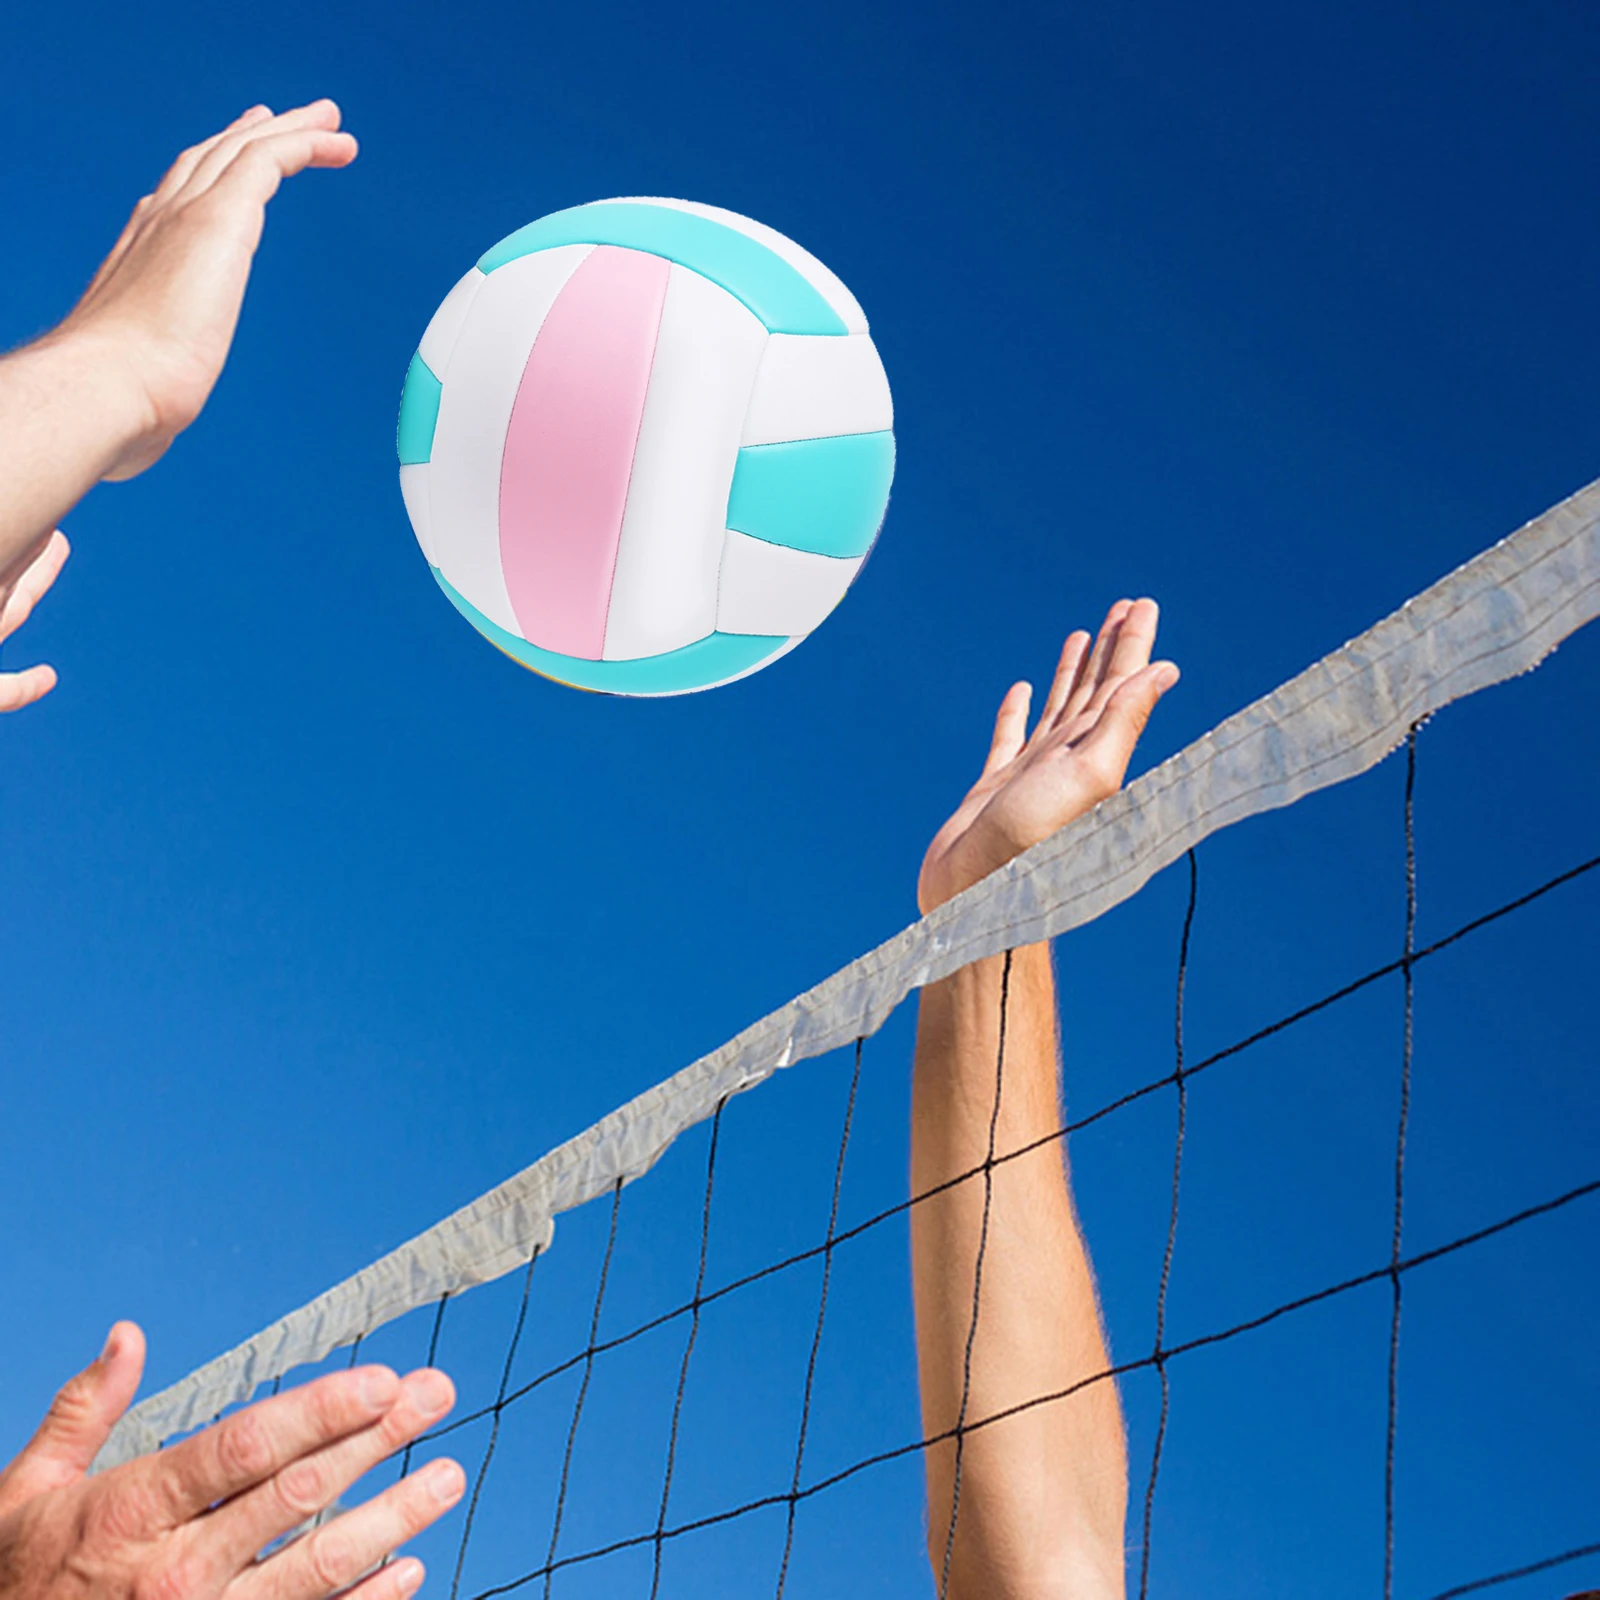 Standardgröße 5 Beachvolleyball Pu Lederball für Kinder Erwachsene Spielpool 